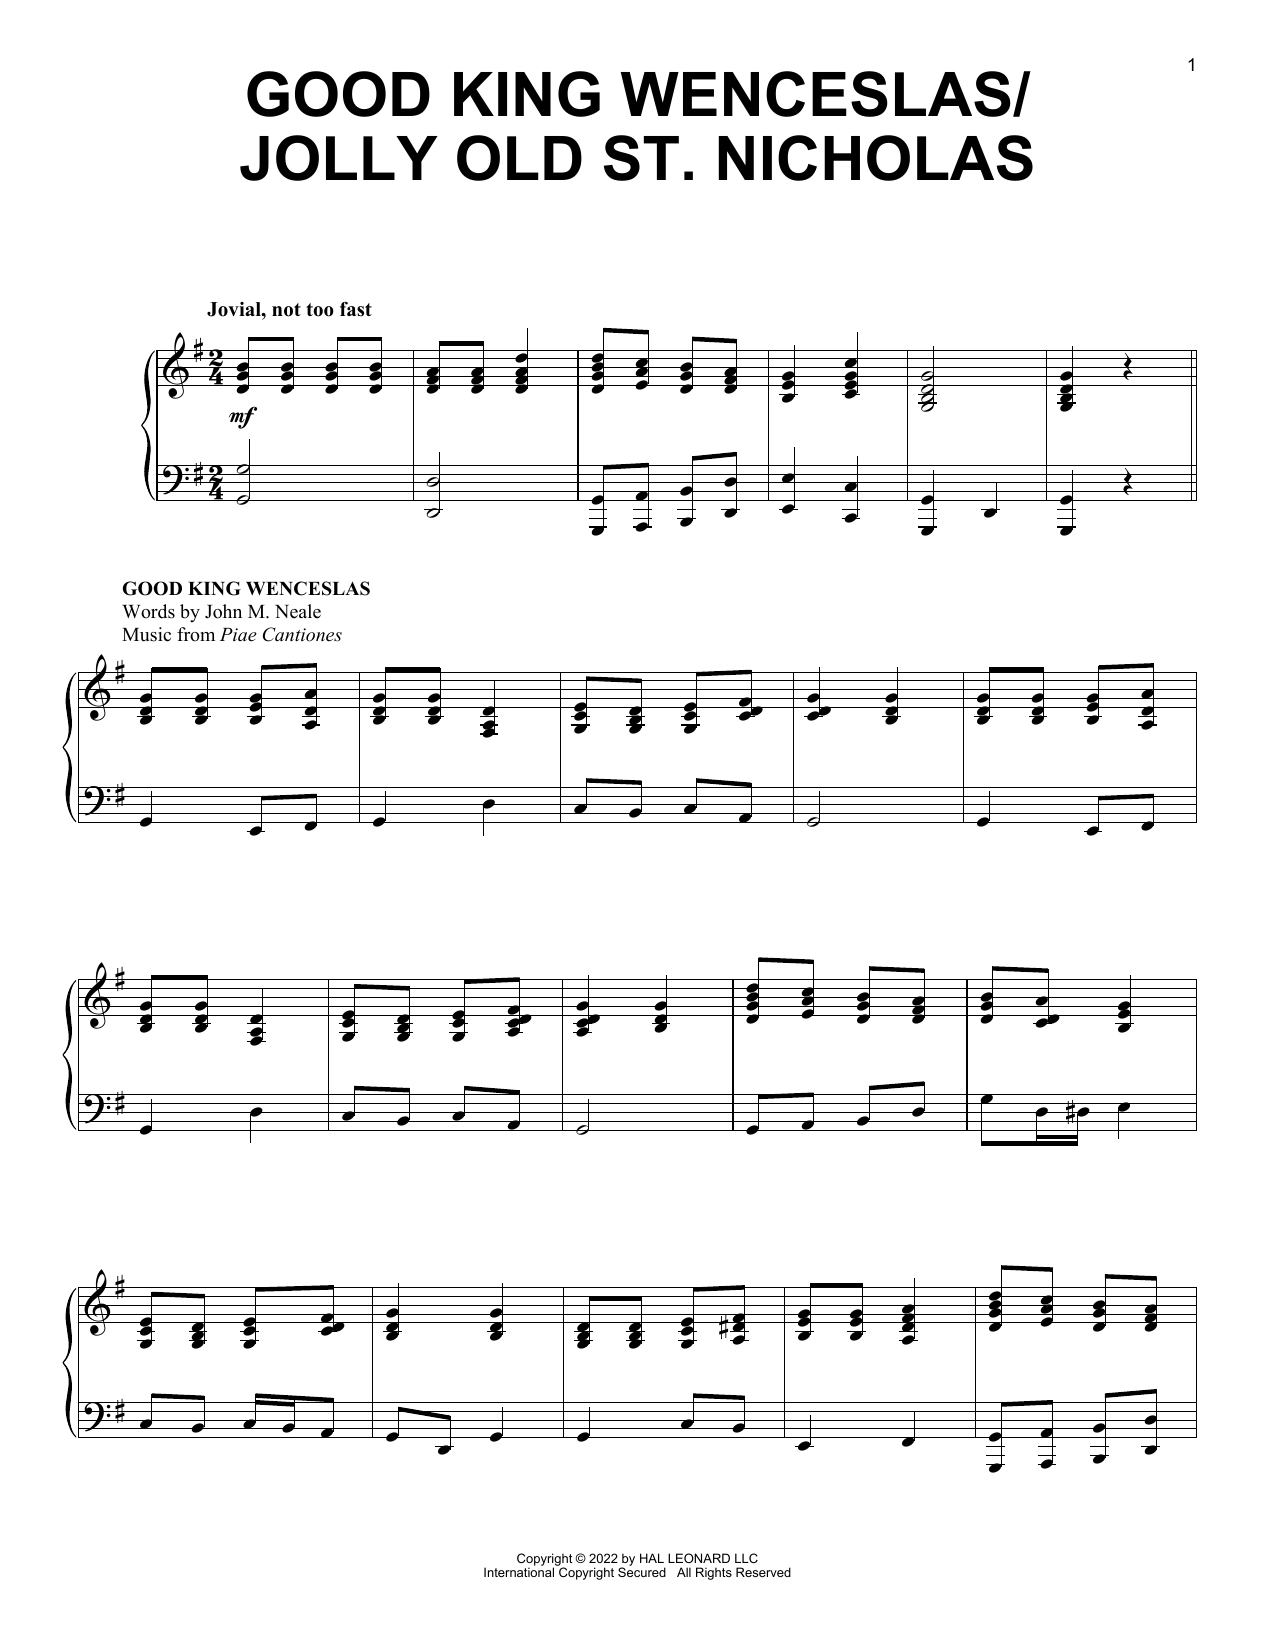 Various Good King Wenceslas/Jolly Old Saint Nicholas Sheet Music Notes & Chords for Piano, Vocal & Guitar Chords (Right-Hand Melody) - Download or Print PDF